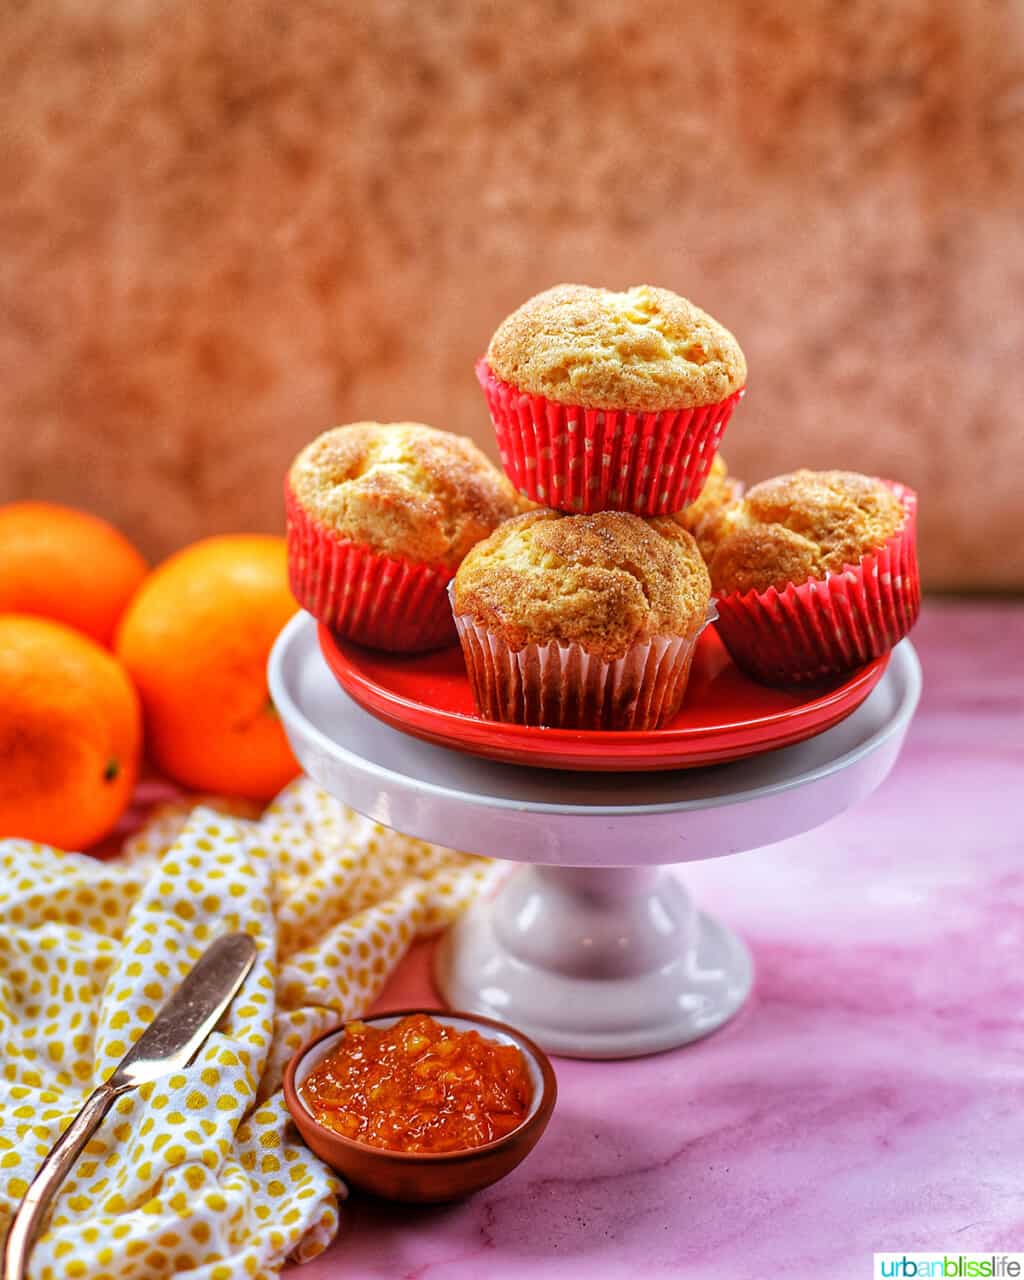 good morning marmalade muffins